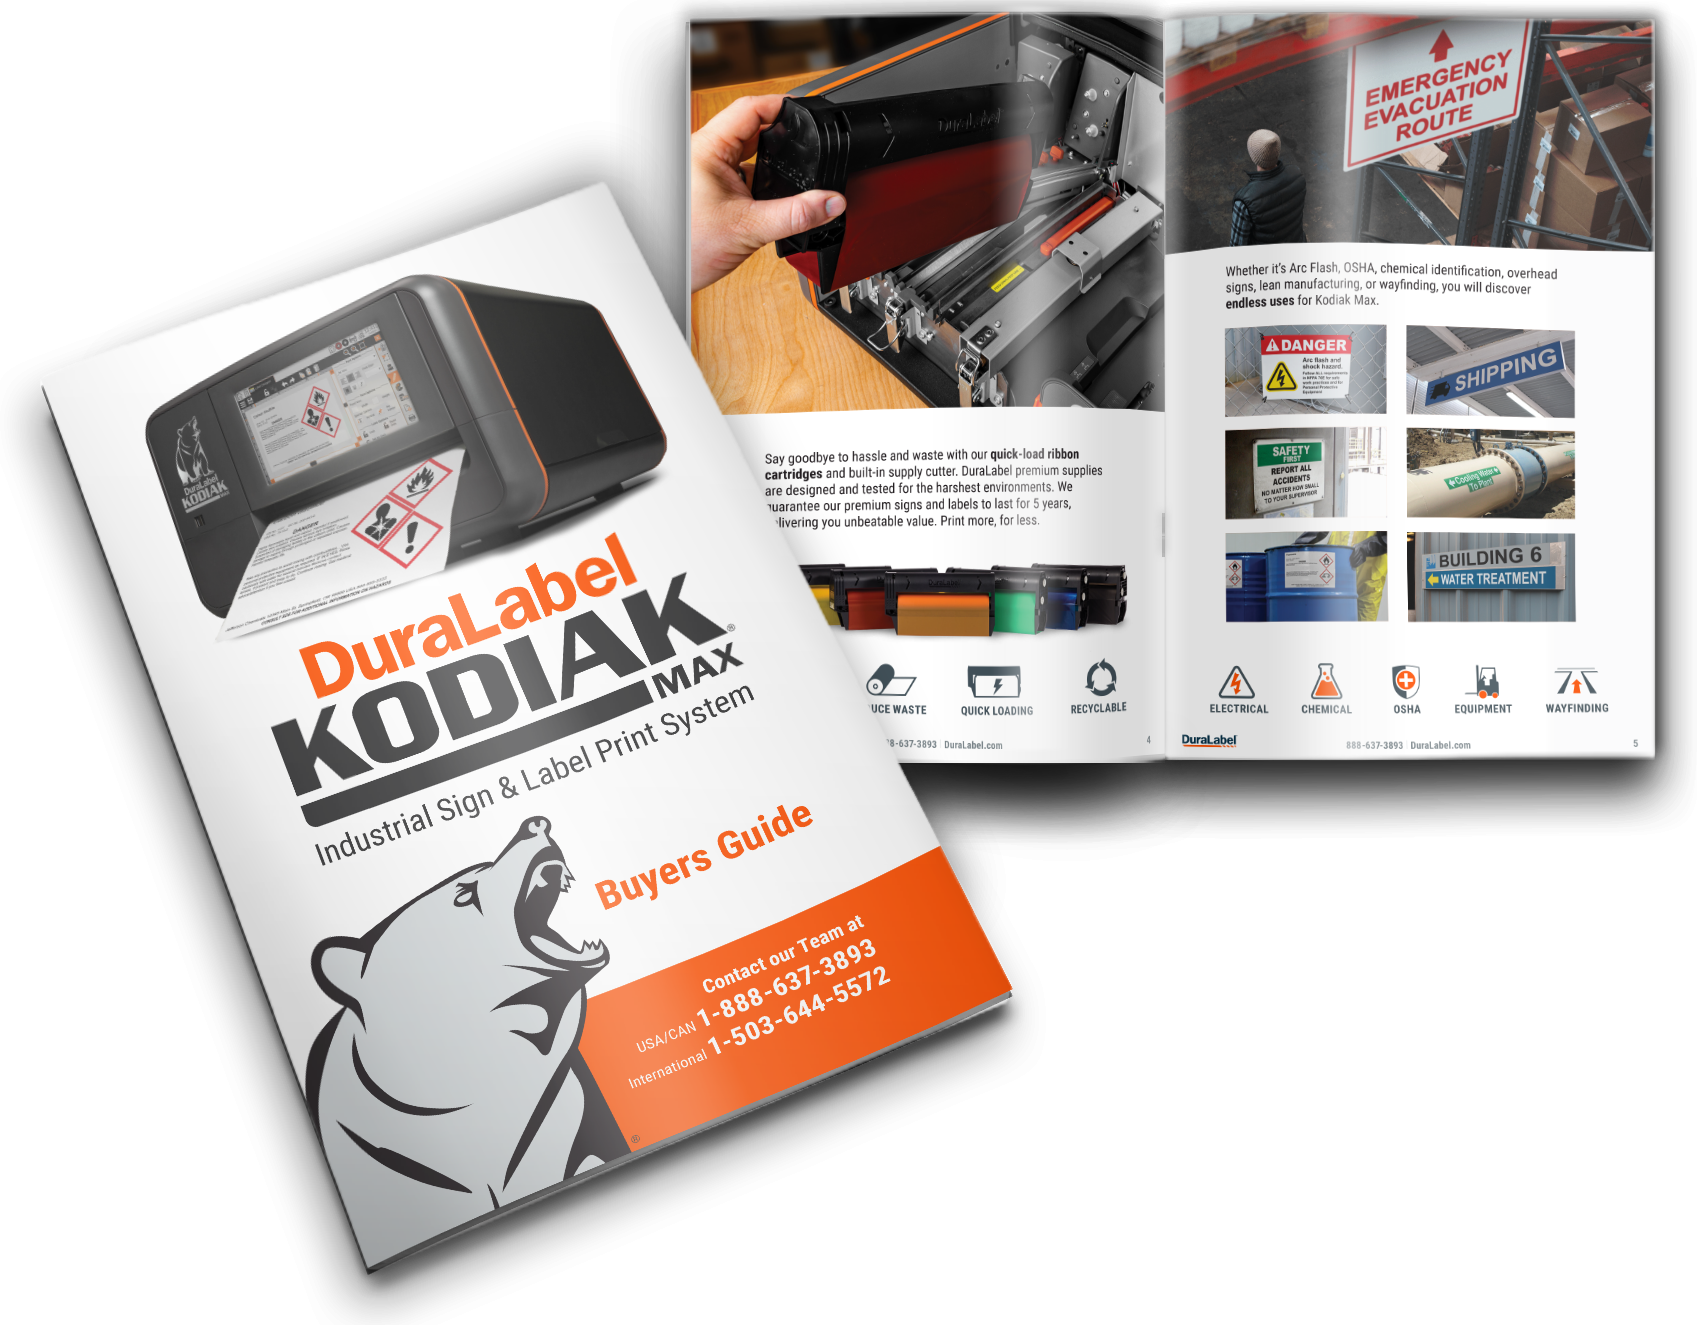 DuraLabel-Kodiak_Max_Buyers_Guide_Thumb